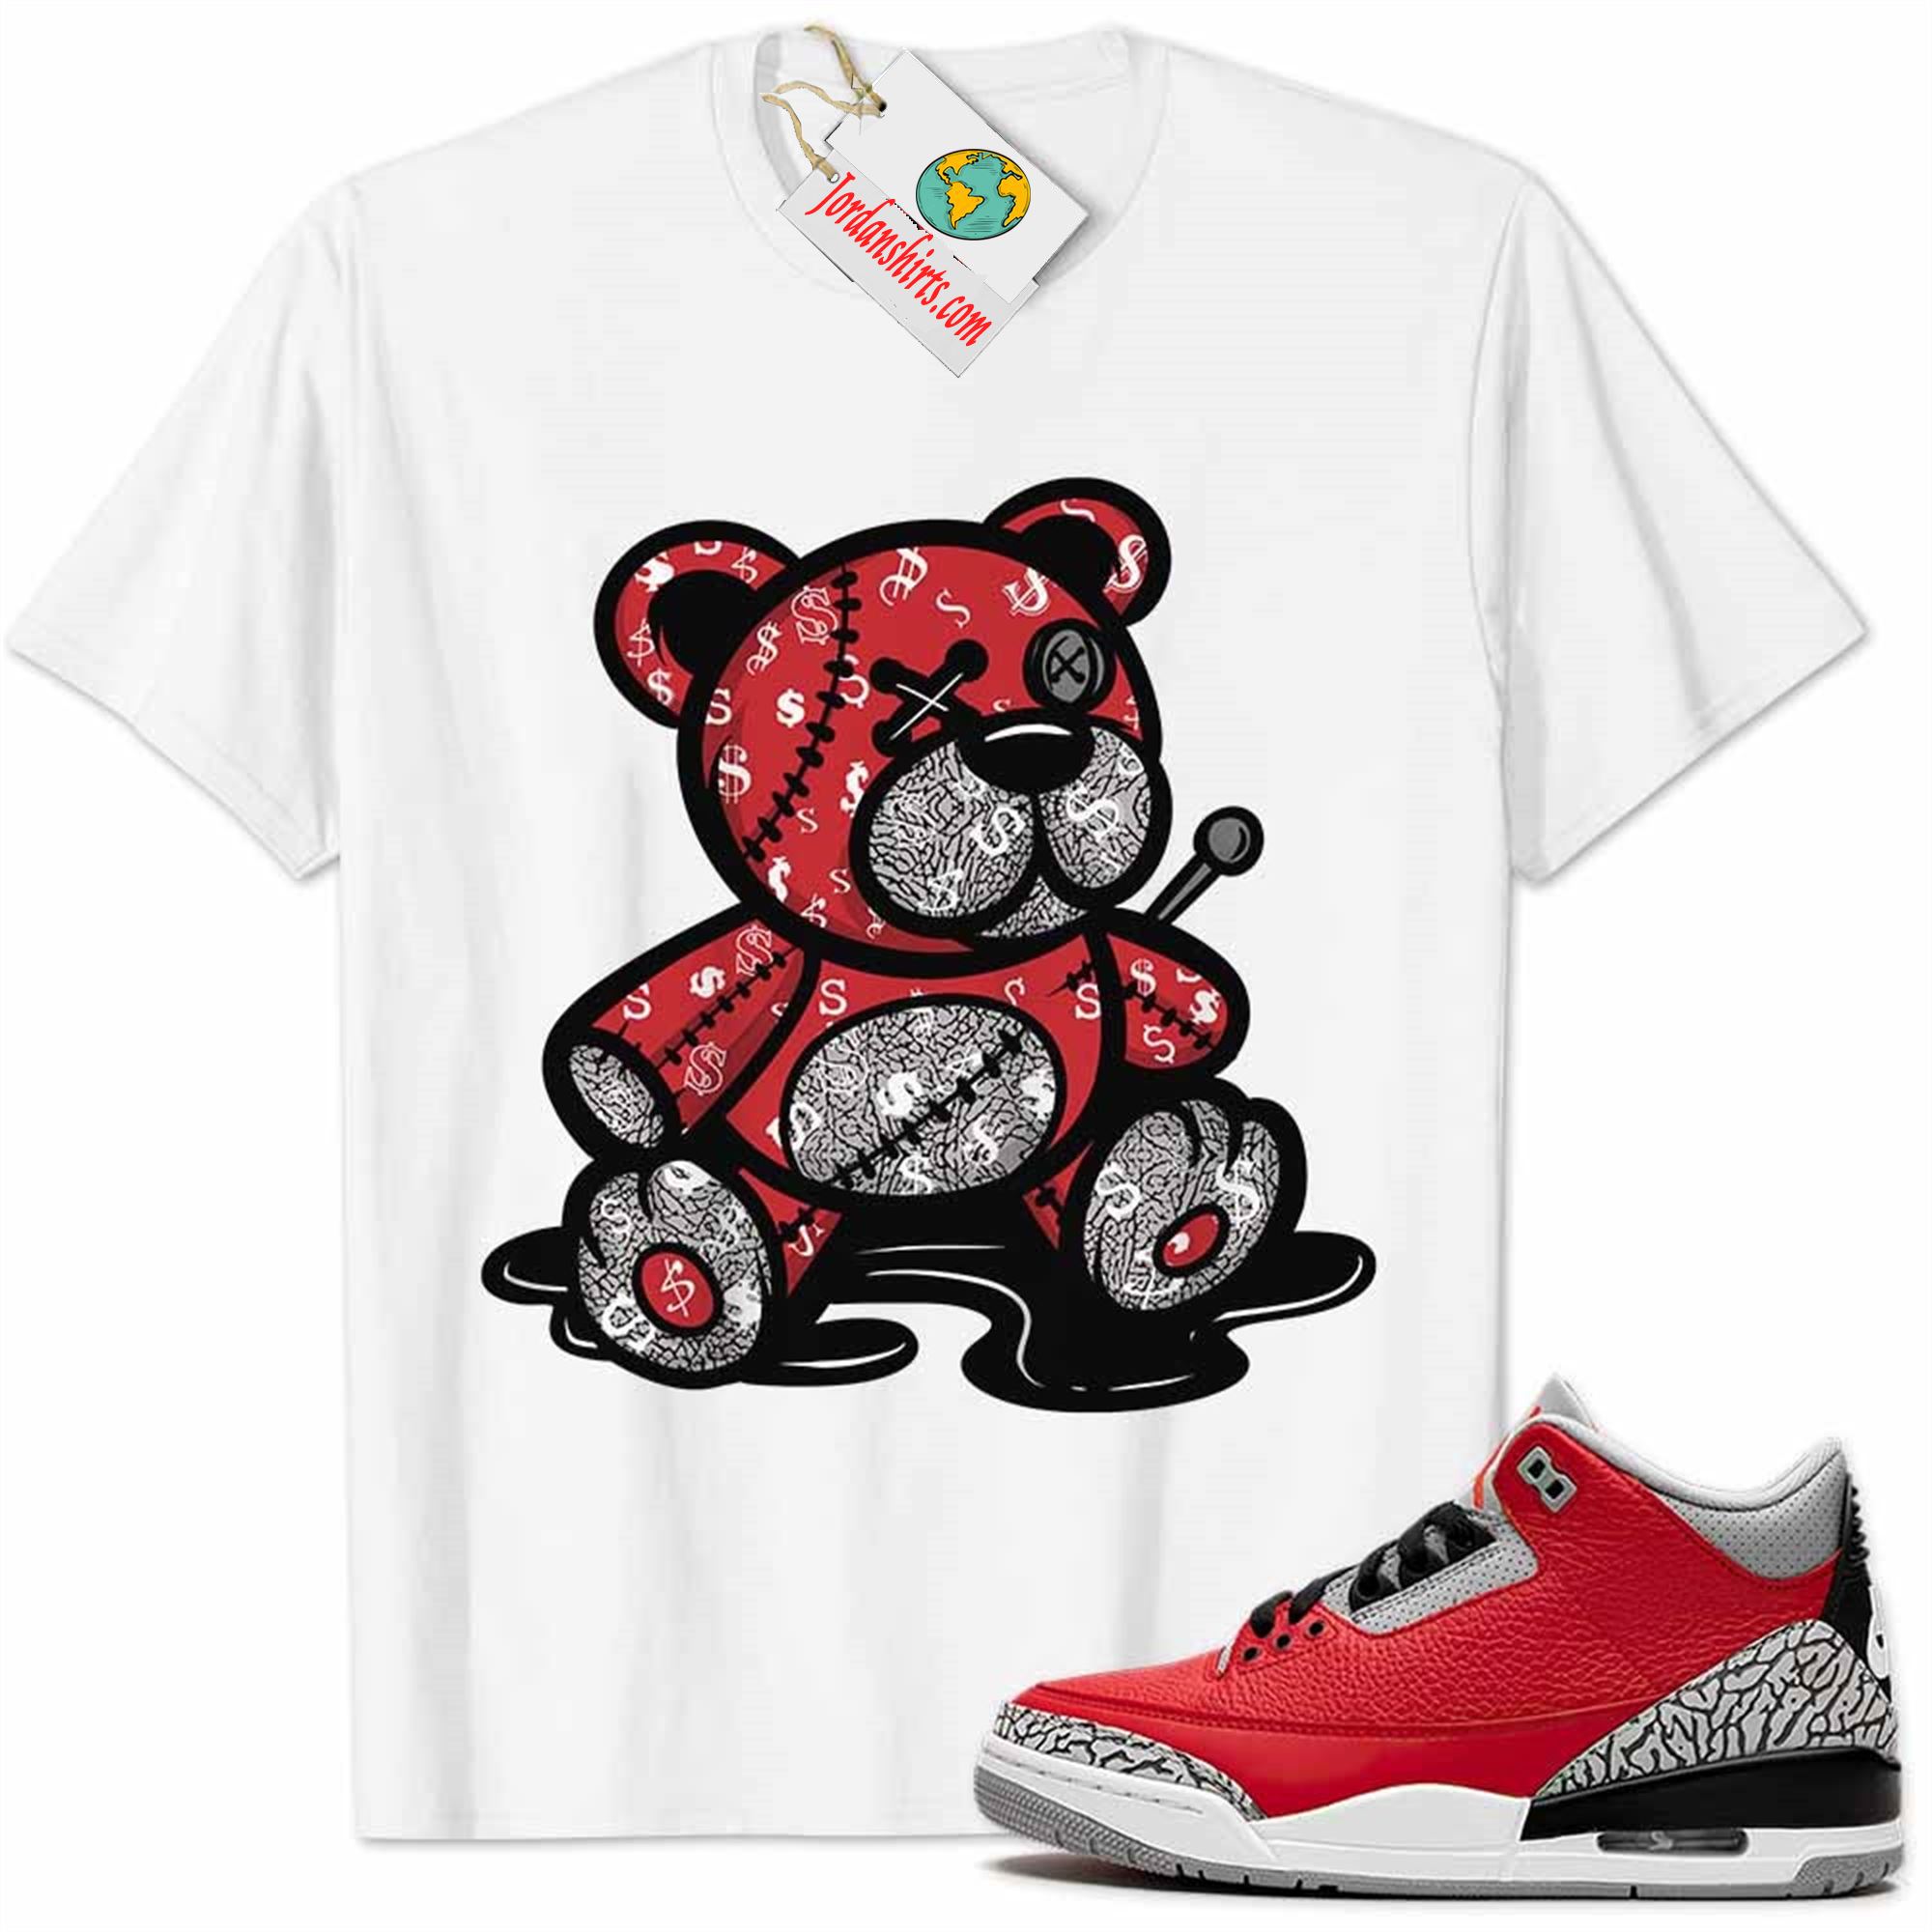 Jordan 3 Shirt, Jordan 3 Cement Shirt Teddy Bear All Money In White Full Size Up To 5xl